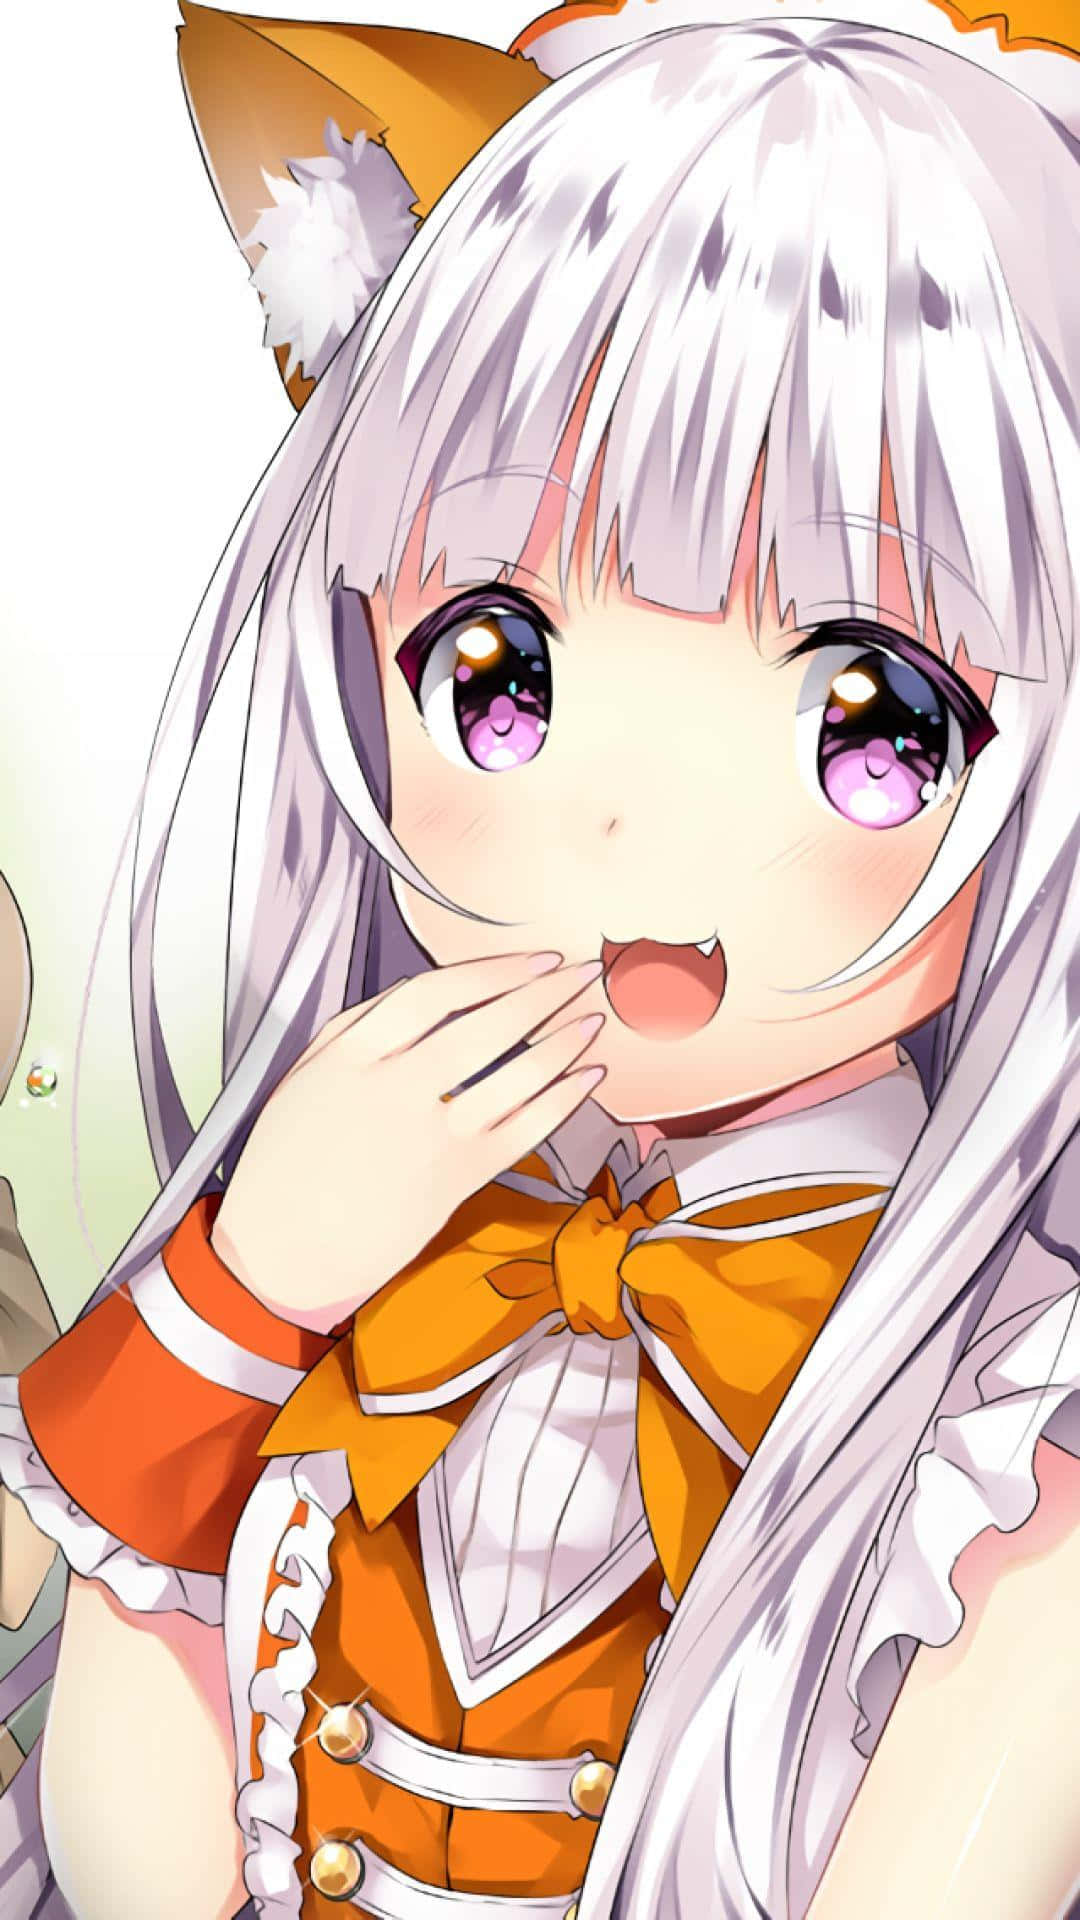 Surprised Anime Neko Girl